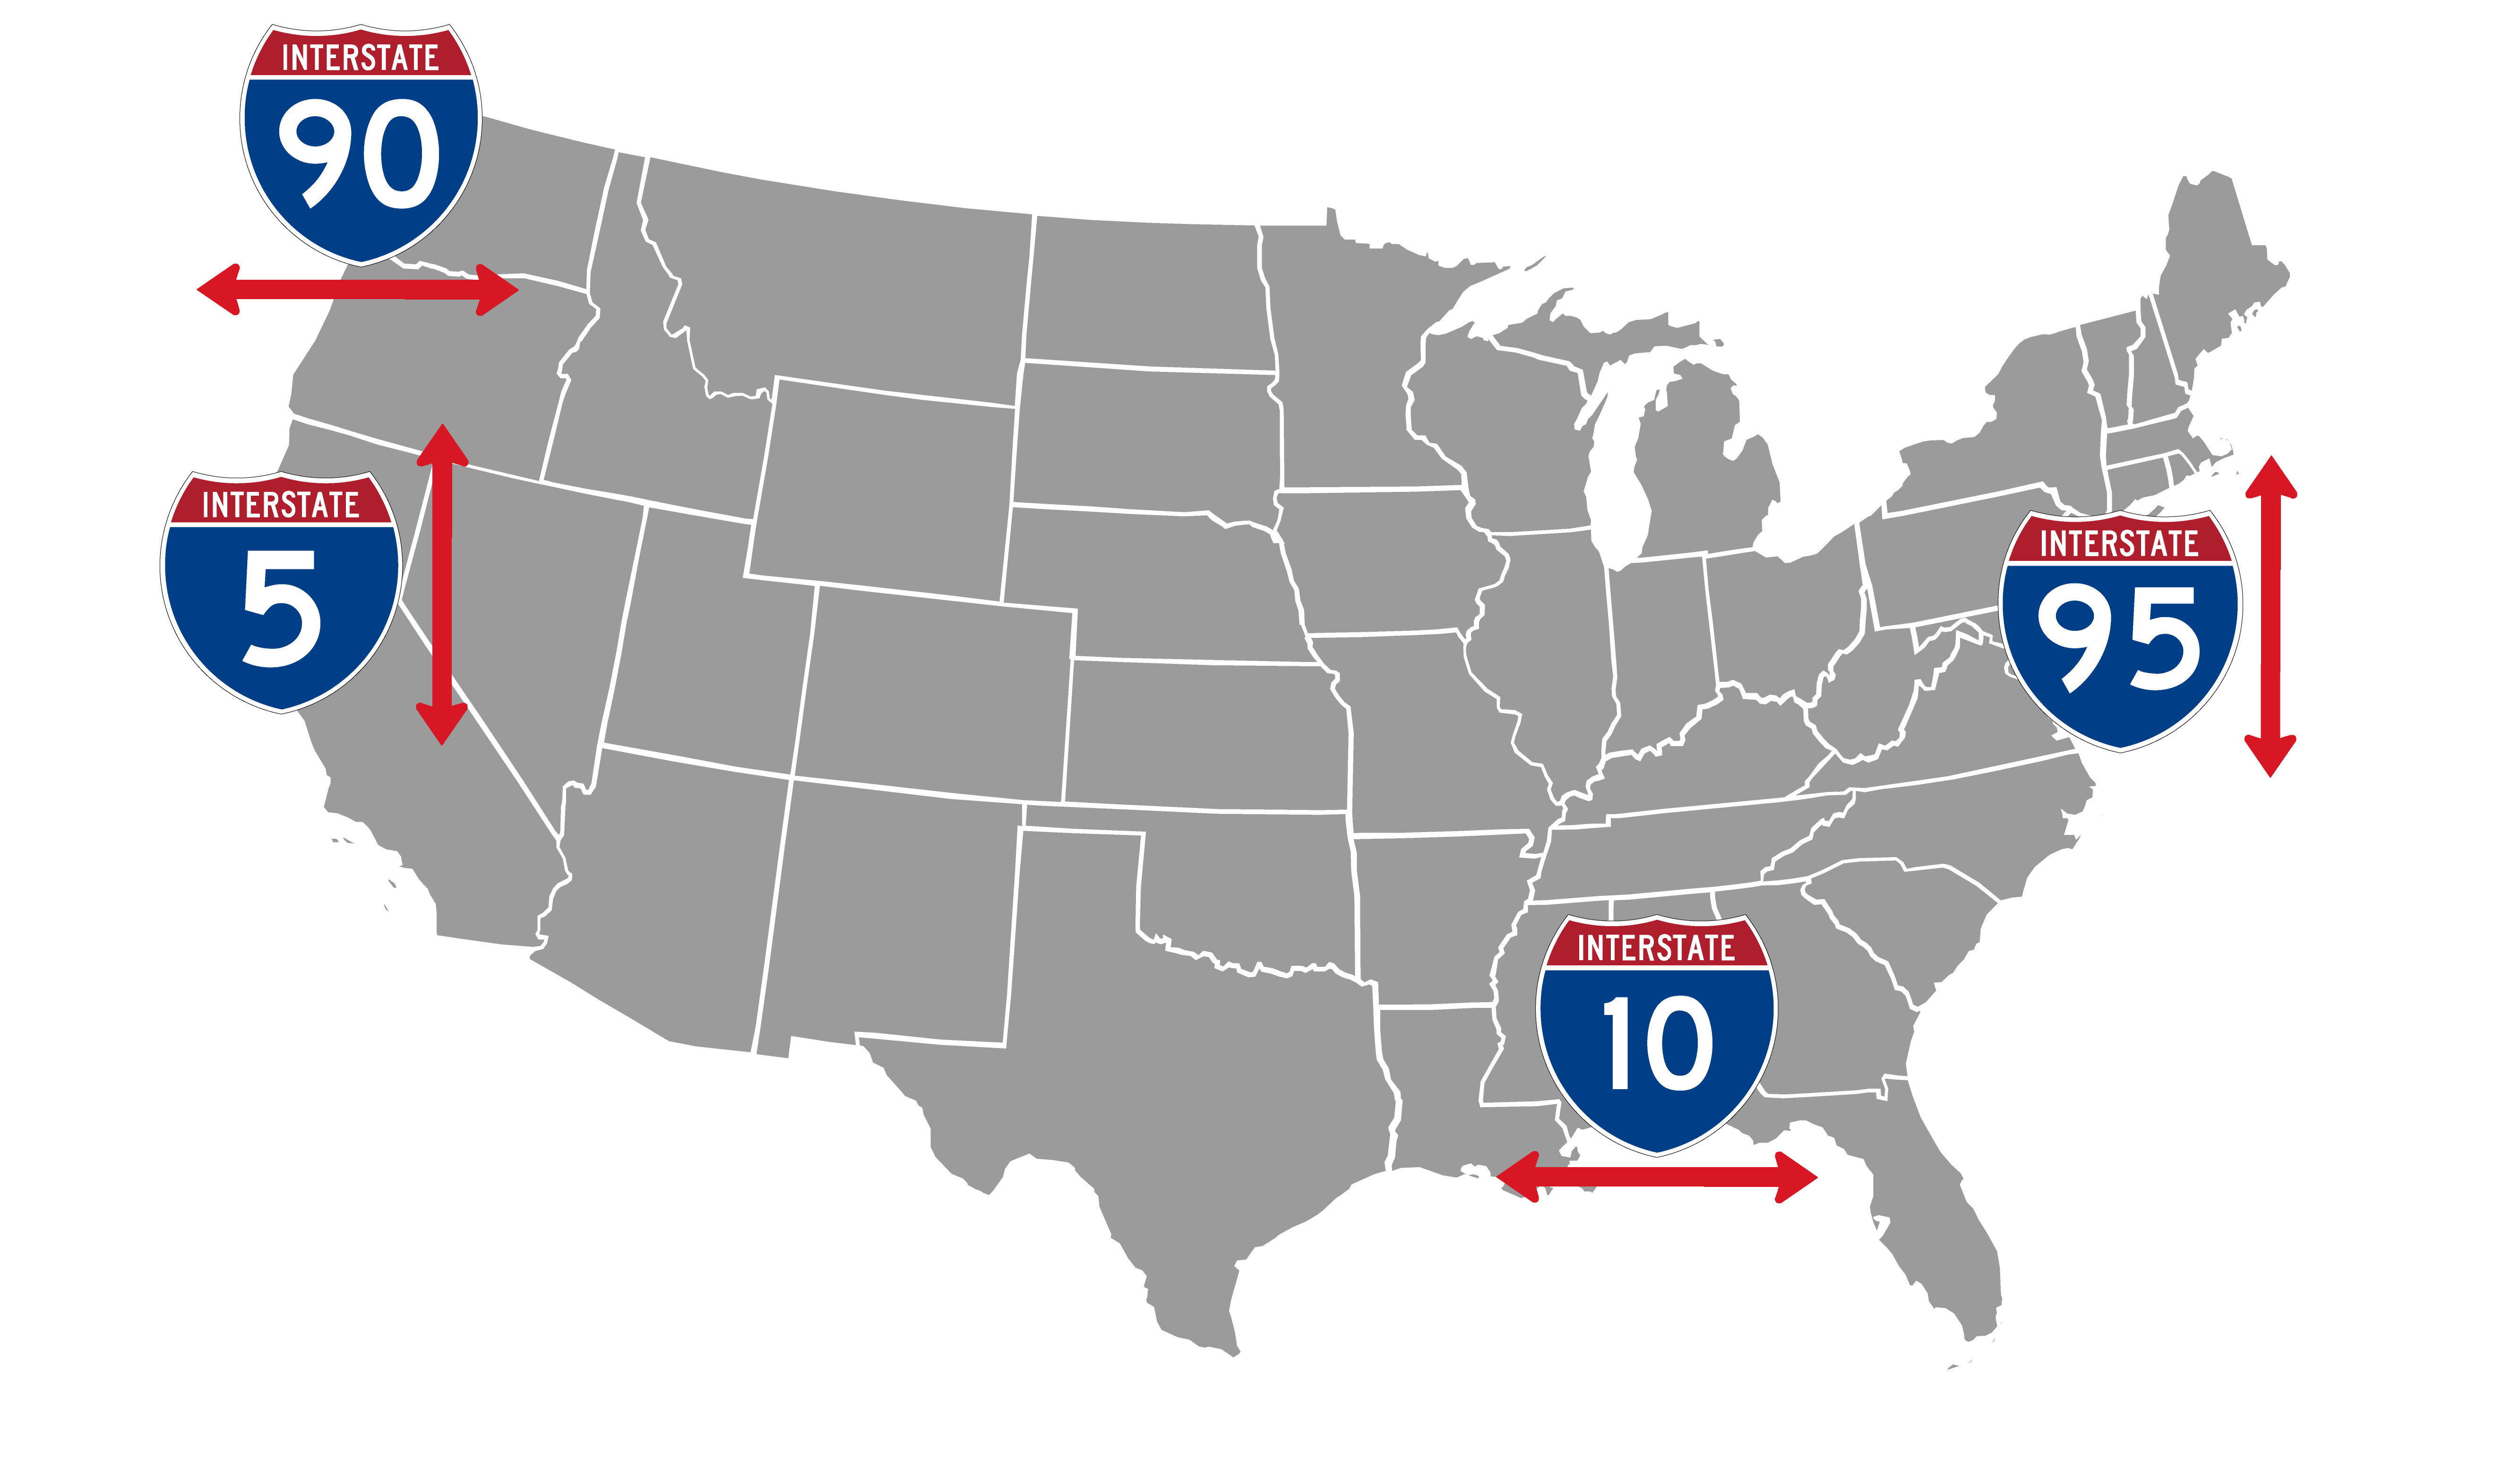 American Highways 101: Visual Guide to U.S. Road Sign Designs